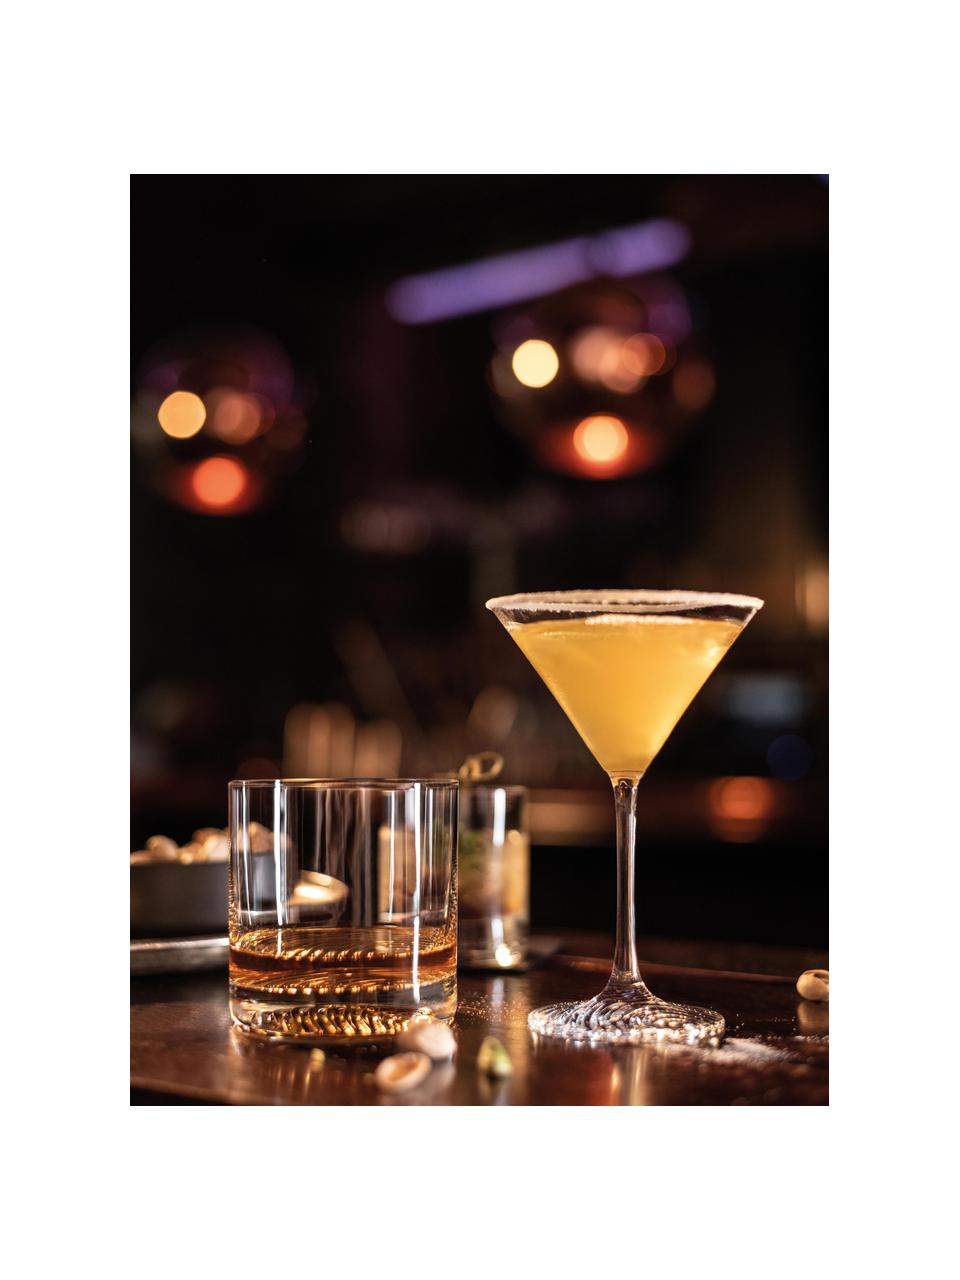 Copas martini de cristal Bar Special, 6 uds., Cristal Tritan, Transparente, Ø 10 x Al 16 cm, 170 ml